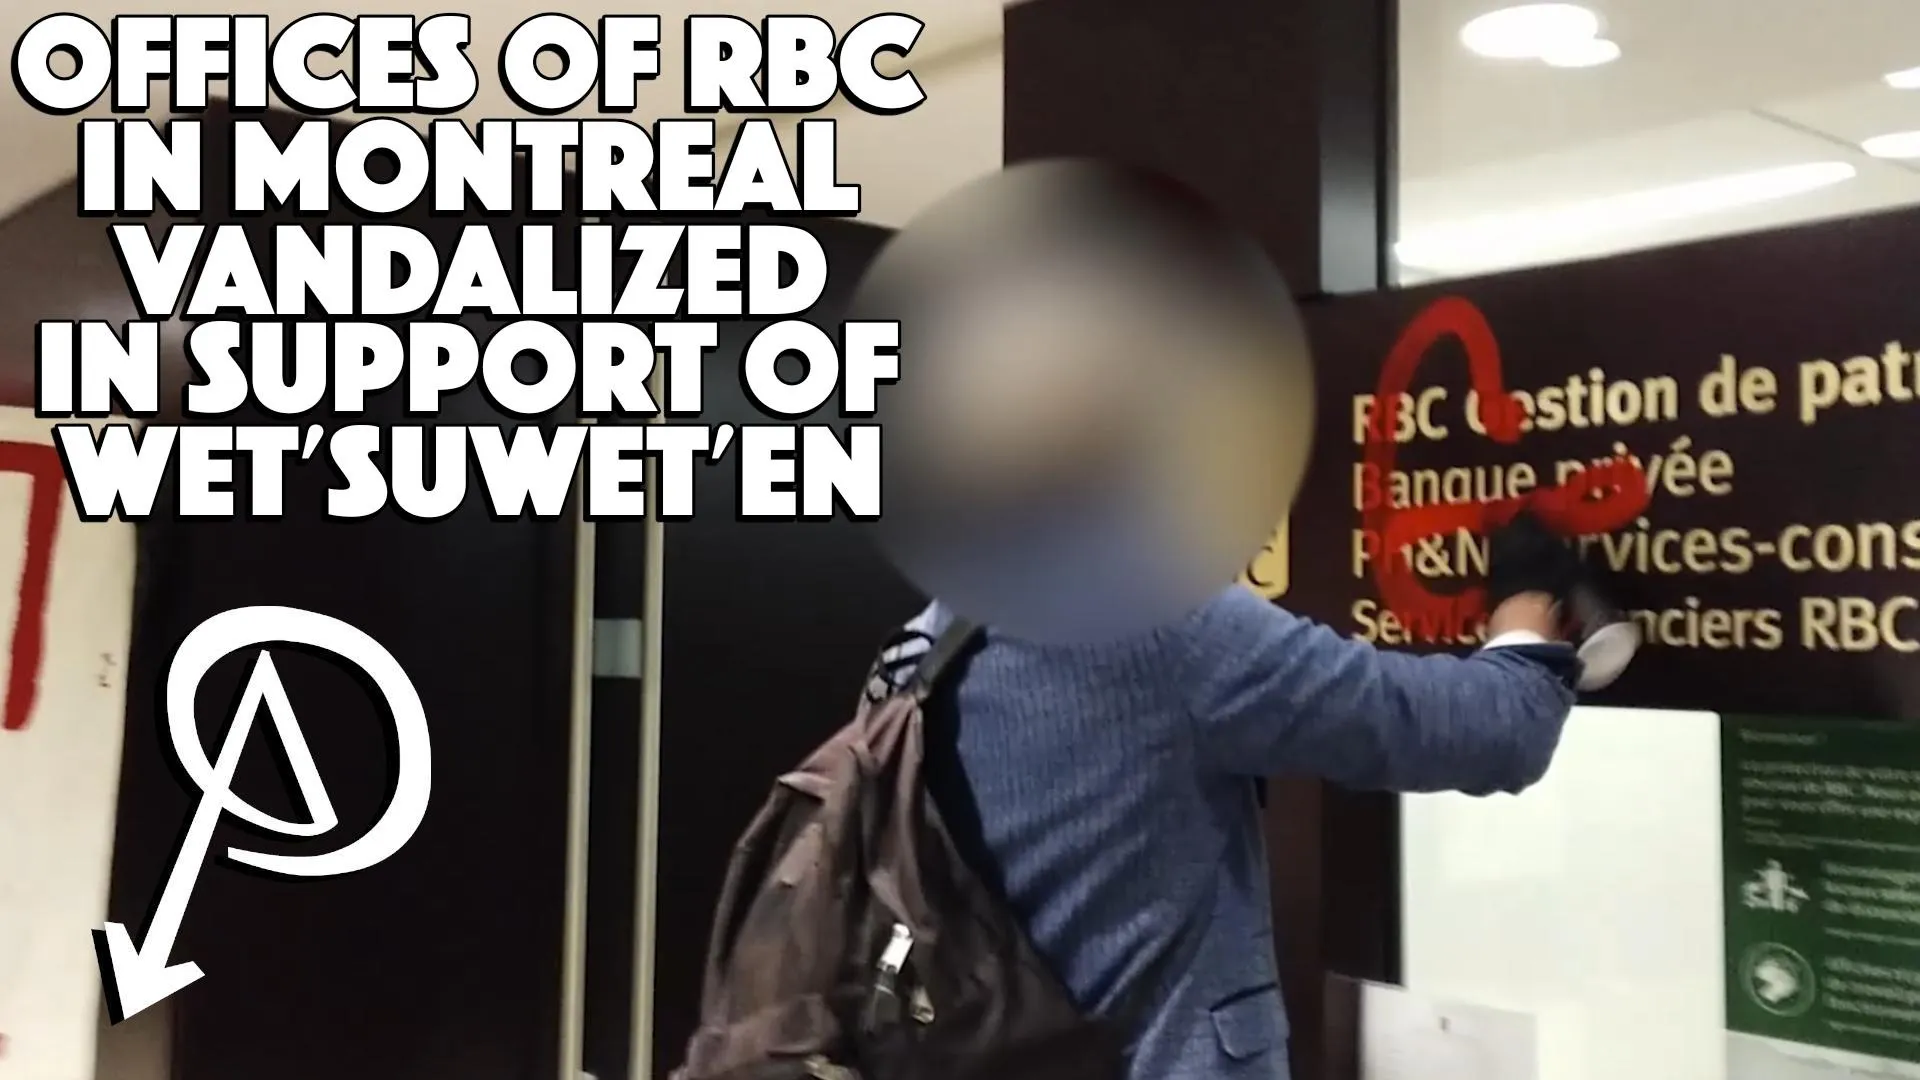 RBC Montreal Offices Vandalized in support of Wet'suwet'en